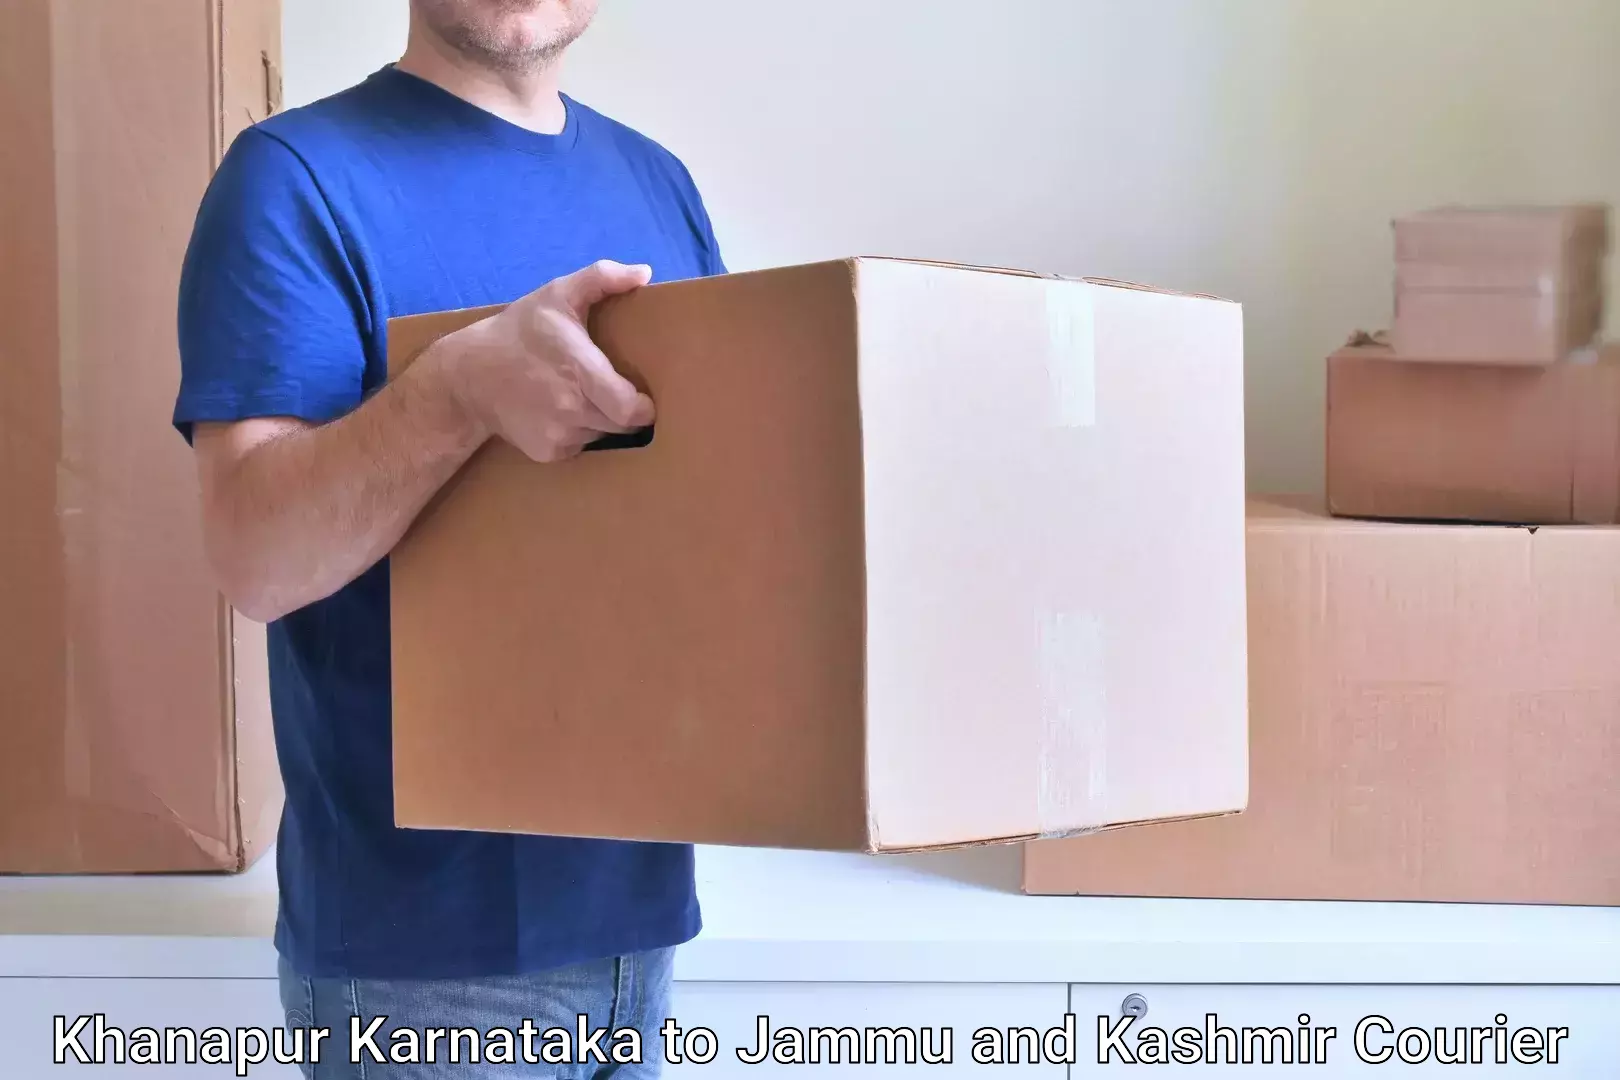 Efficient cargo handling Khanapur Karnataka to Kupwara